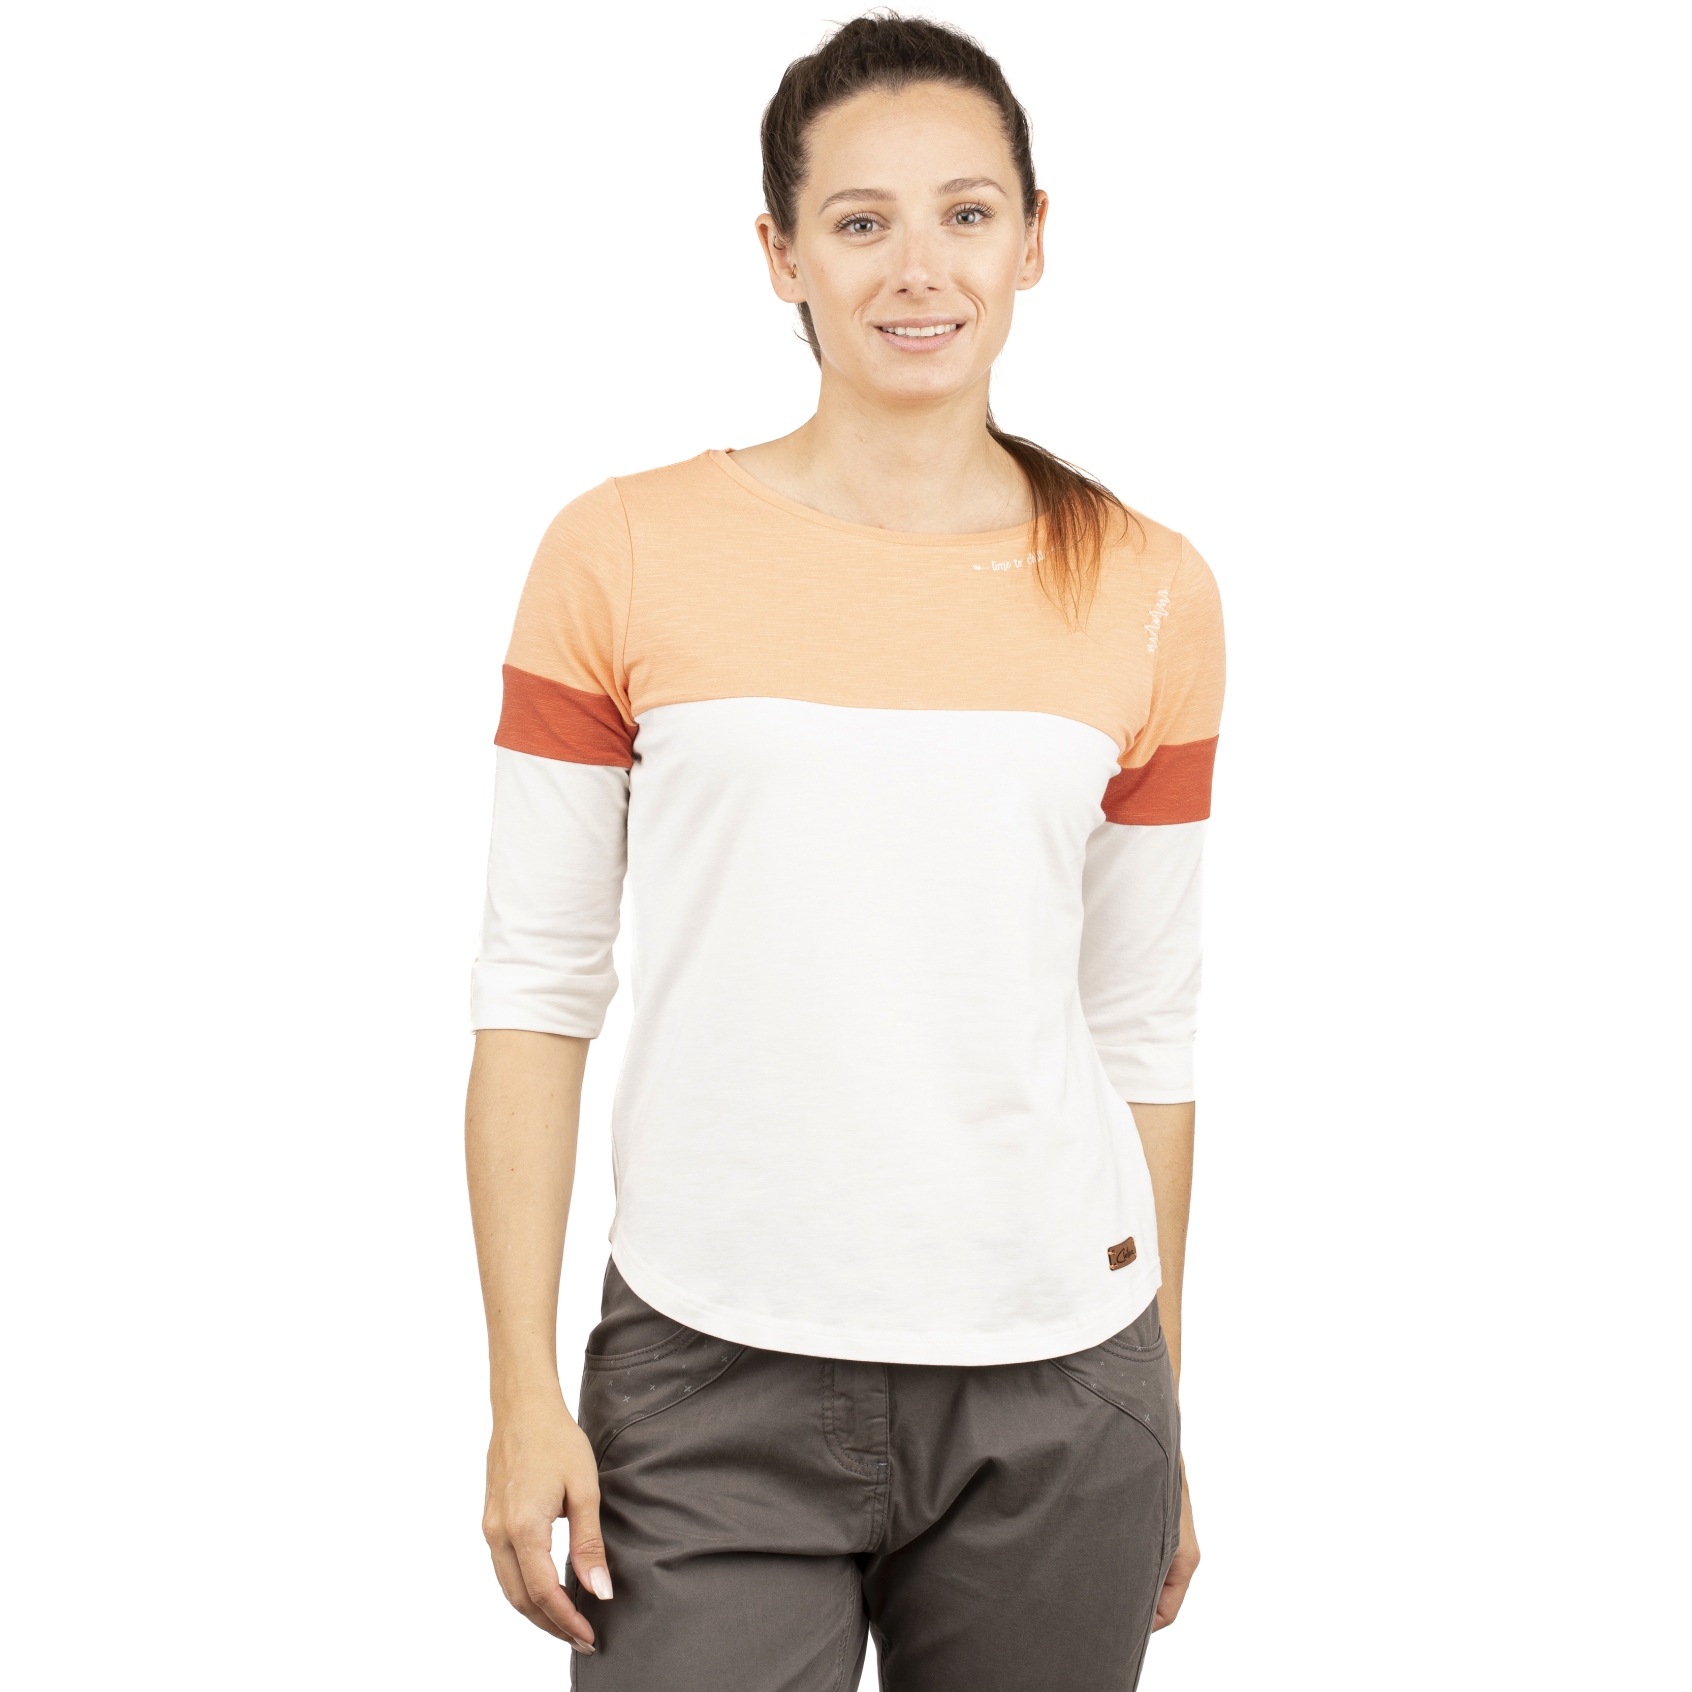 Productfoto van Chillaz Balanced Shirt met 3/4-Mouwen Dames - coral/white